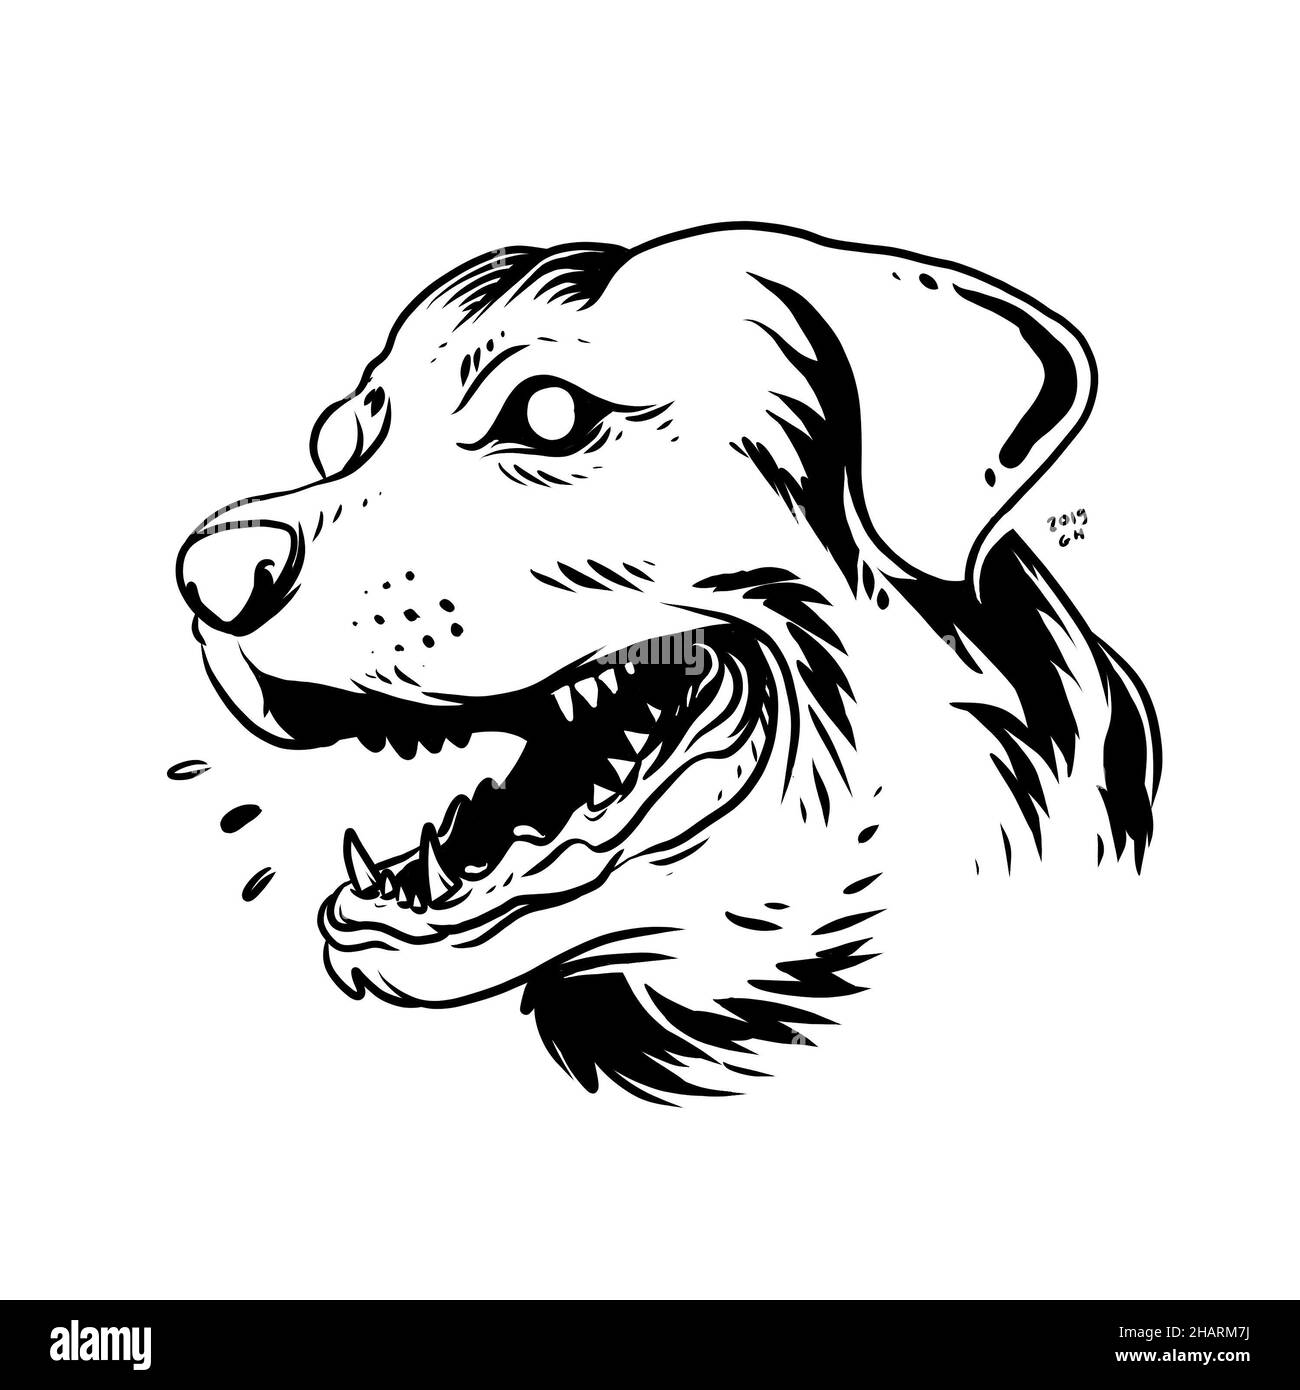 Dog tattoo Black and White Stock Photos & Images - Alamy